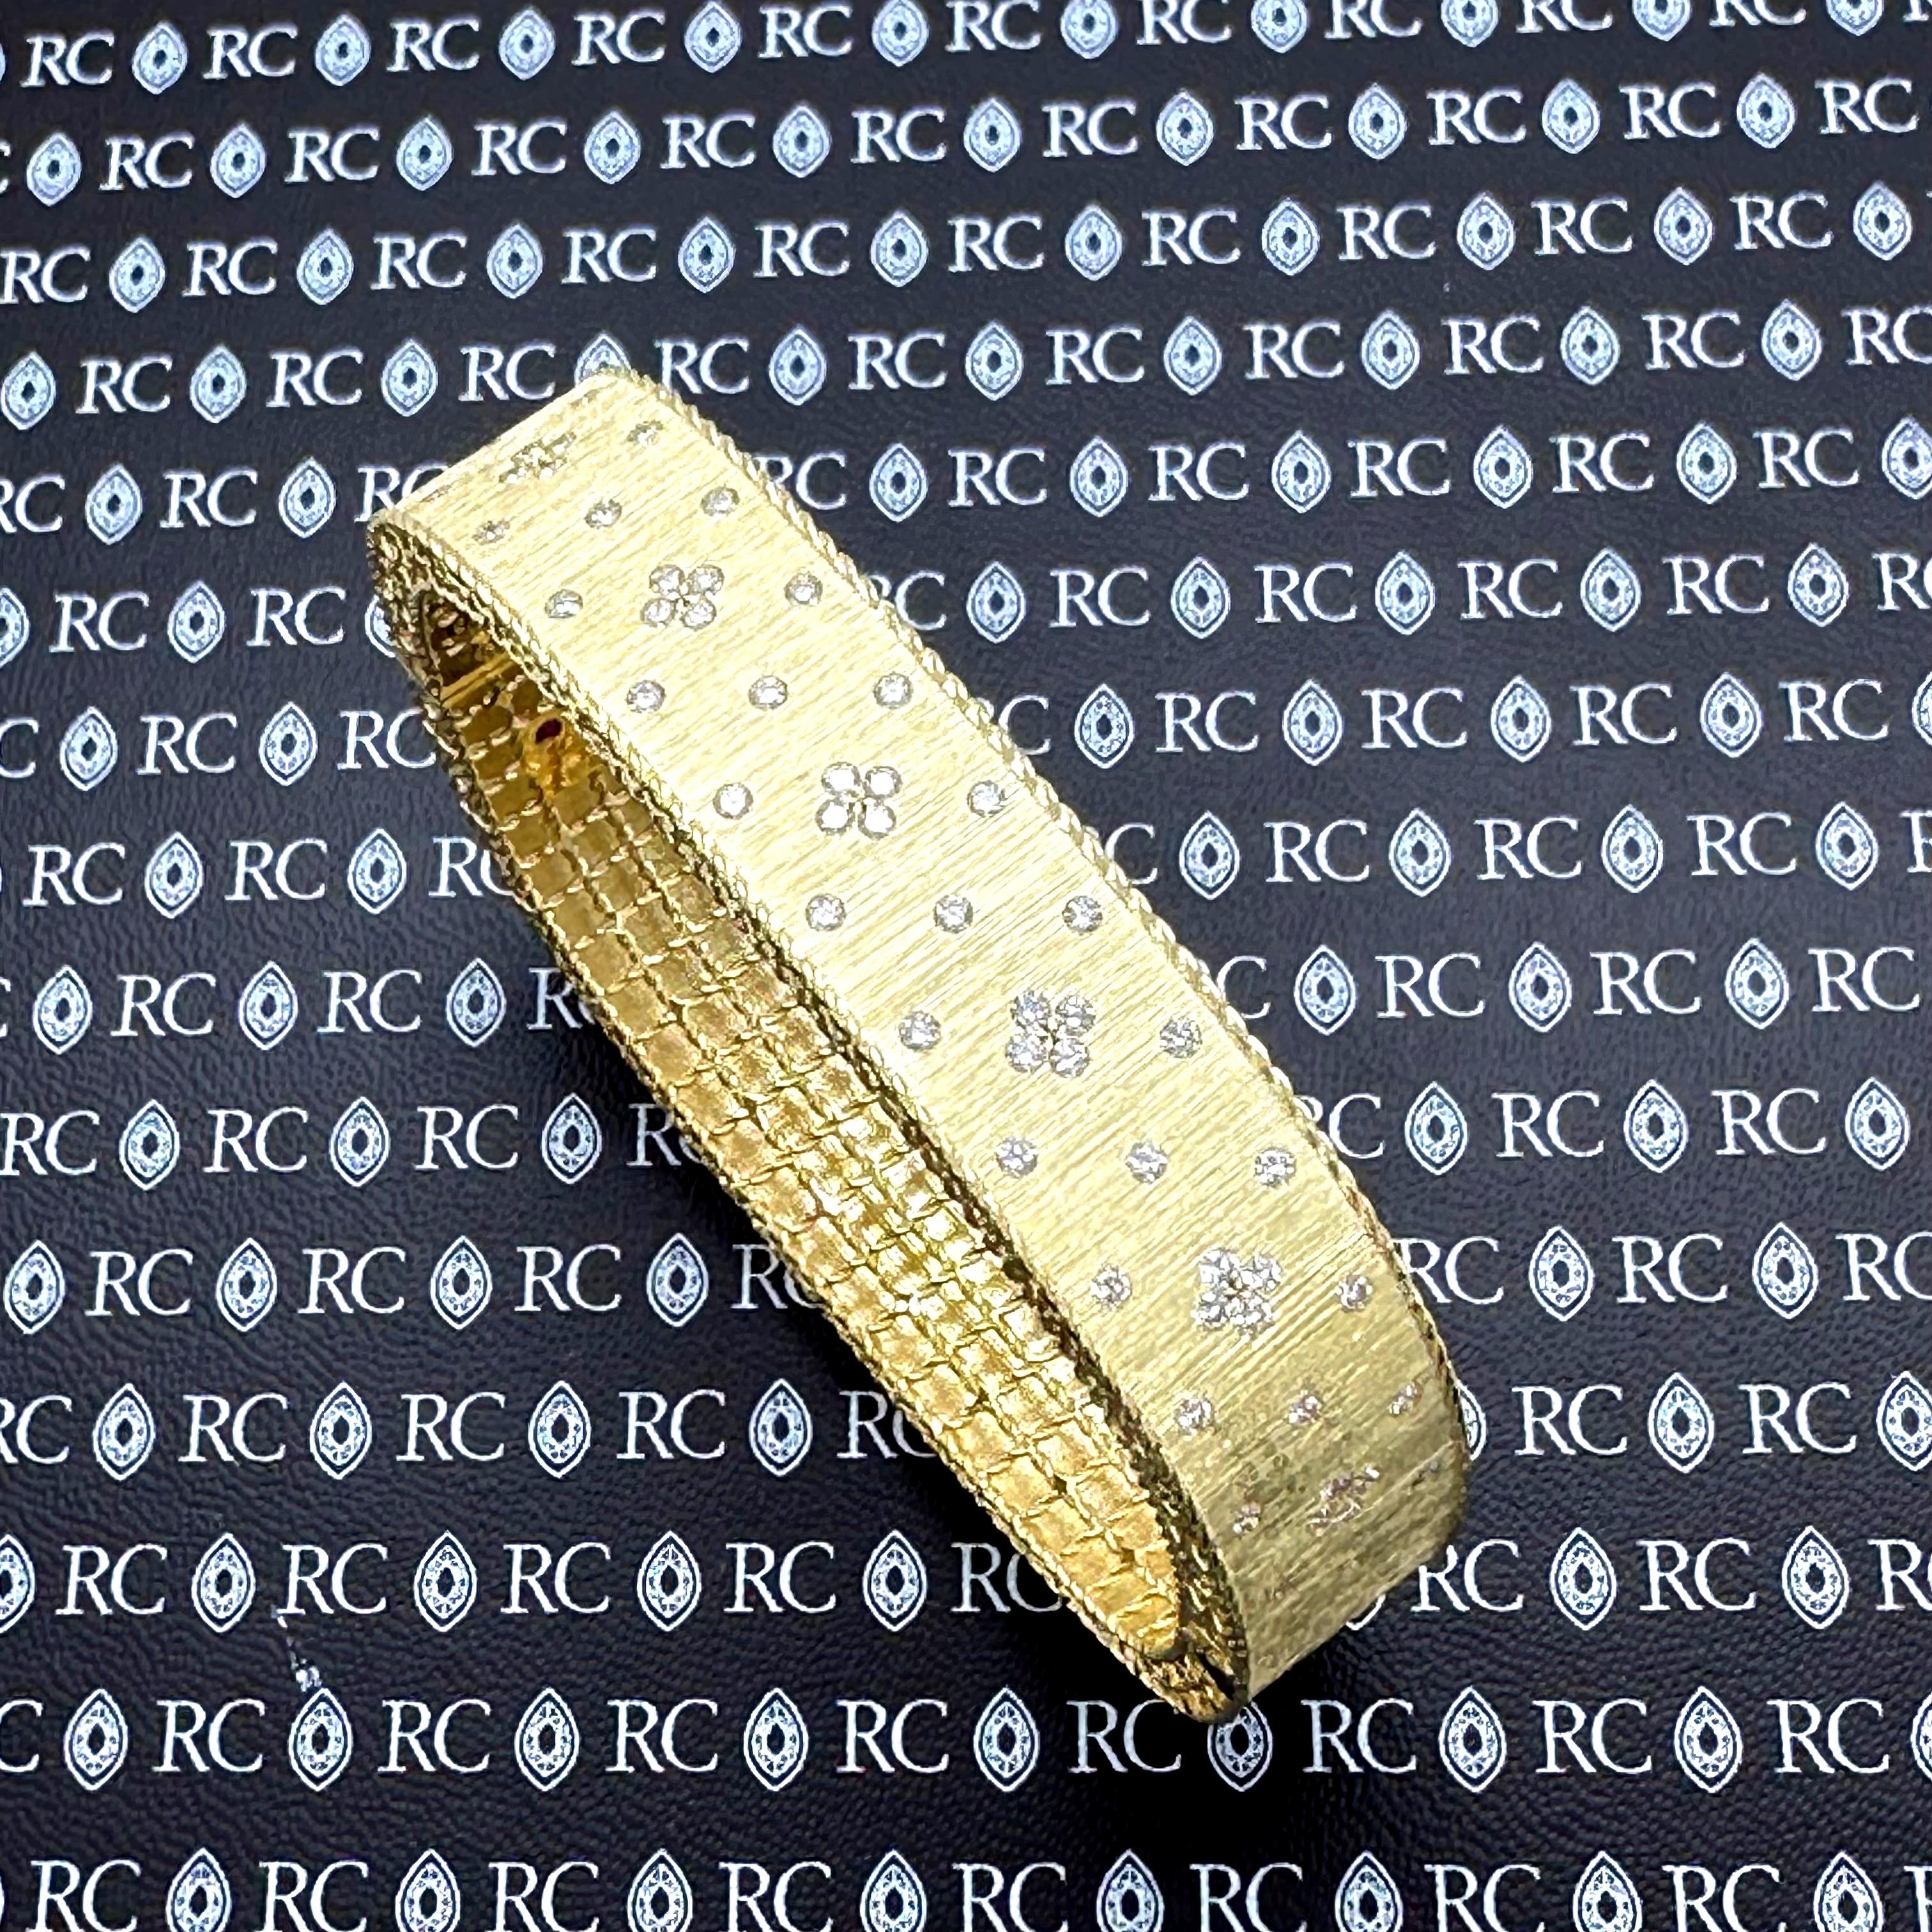 Roberto Coin Princess Satin Fluer De Lis Bangle
Style:   Bangle Bracelet
Ref. number:   7771195AYBAX
Metal:   18kt Yellow Gold 31.2 grams
Measurements:  6.5' Inches / 12 mm Wide
Main Stone:  64 Round Brilliant Diamonds. ~0.87 tcw
Hallmark:  RC